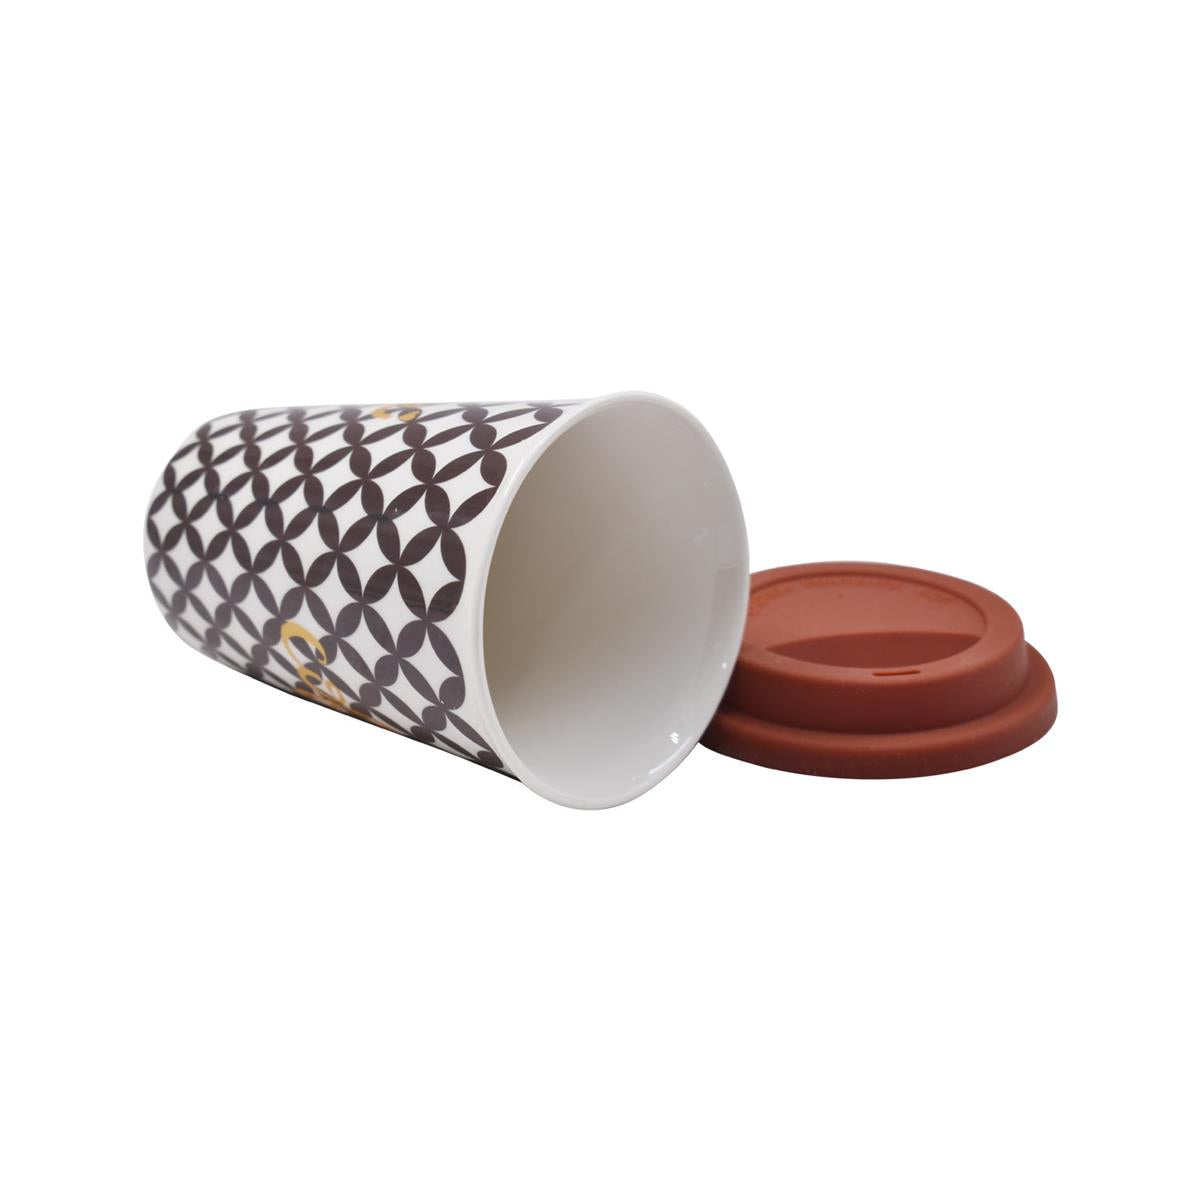 Ceramic Coffee or Tea Tall Tumbler with Silicone Lid - 275ml (BPM4875-B)